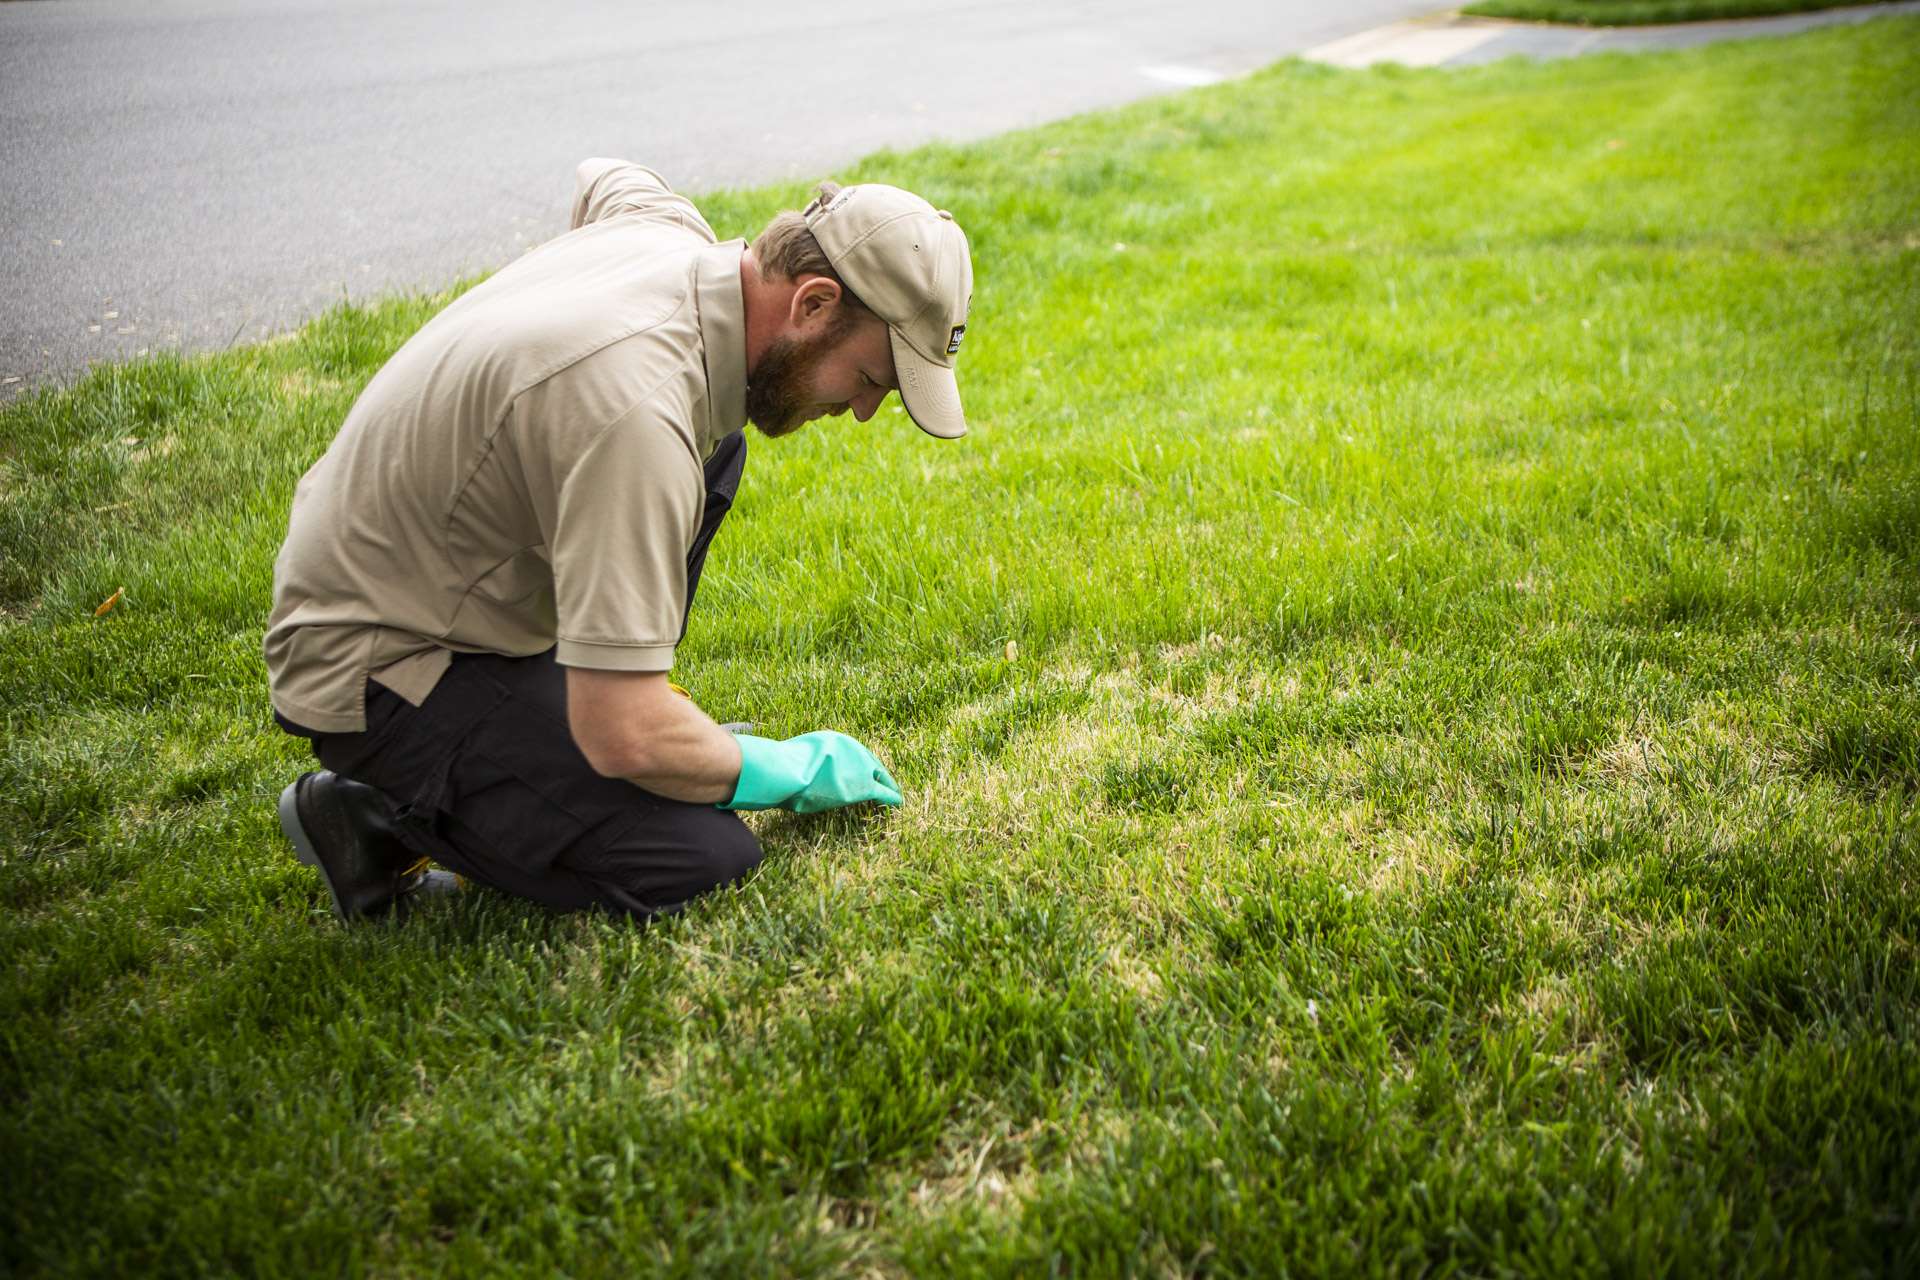 Lawn care technician inspecting a lawn